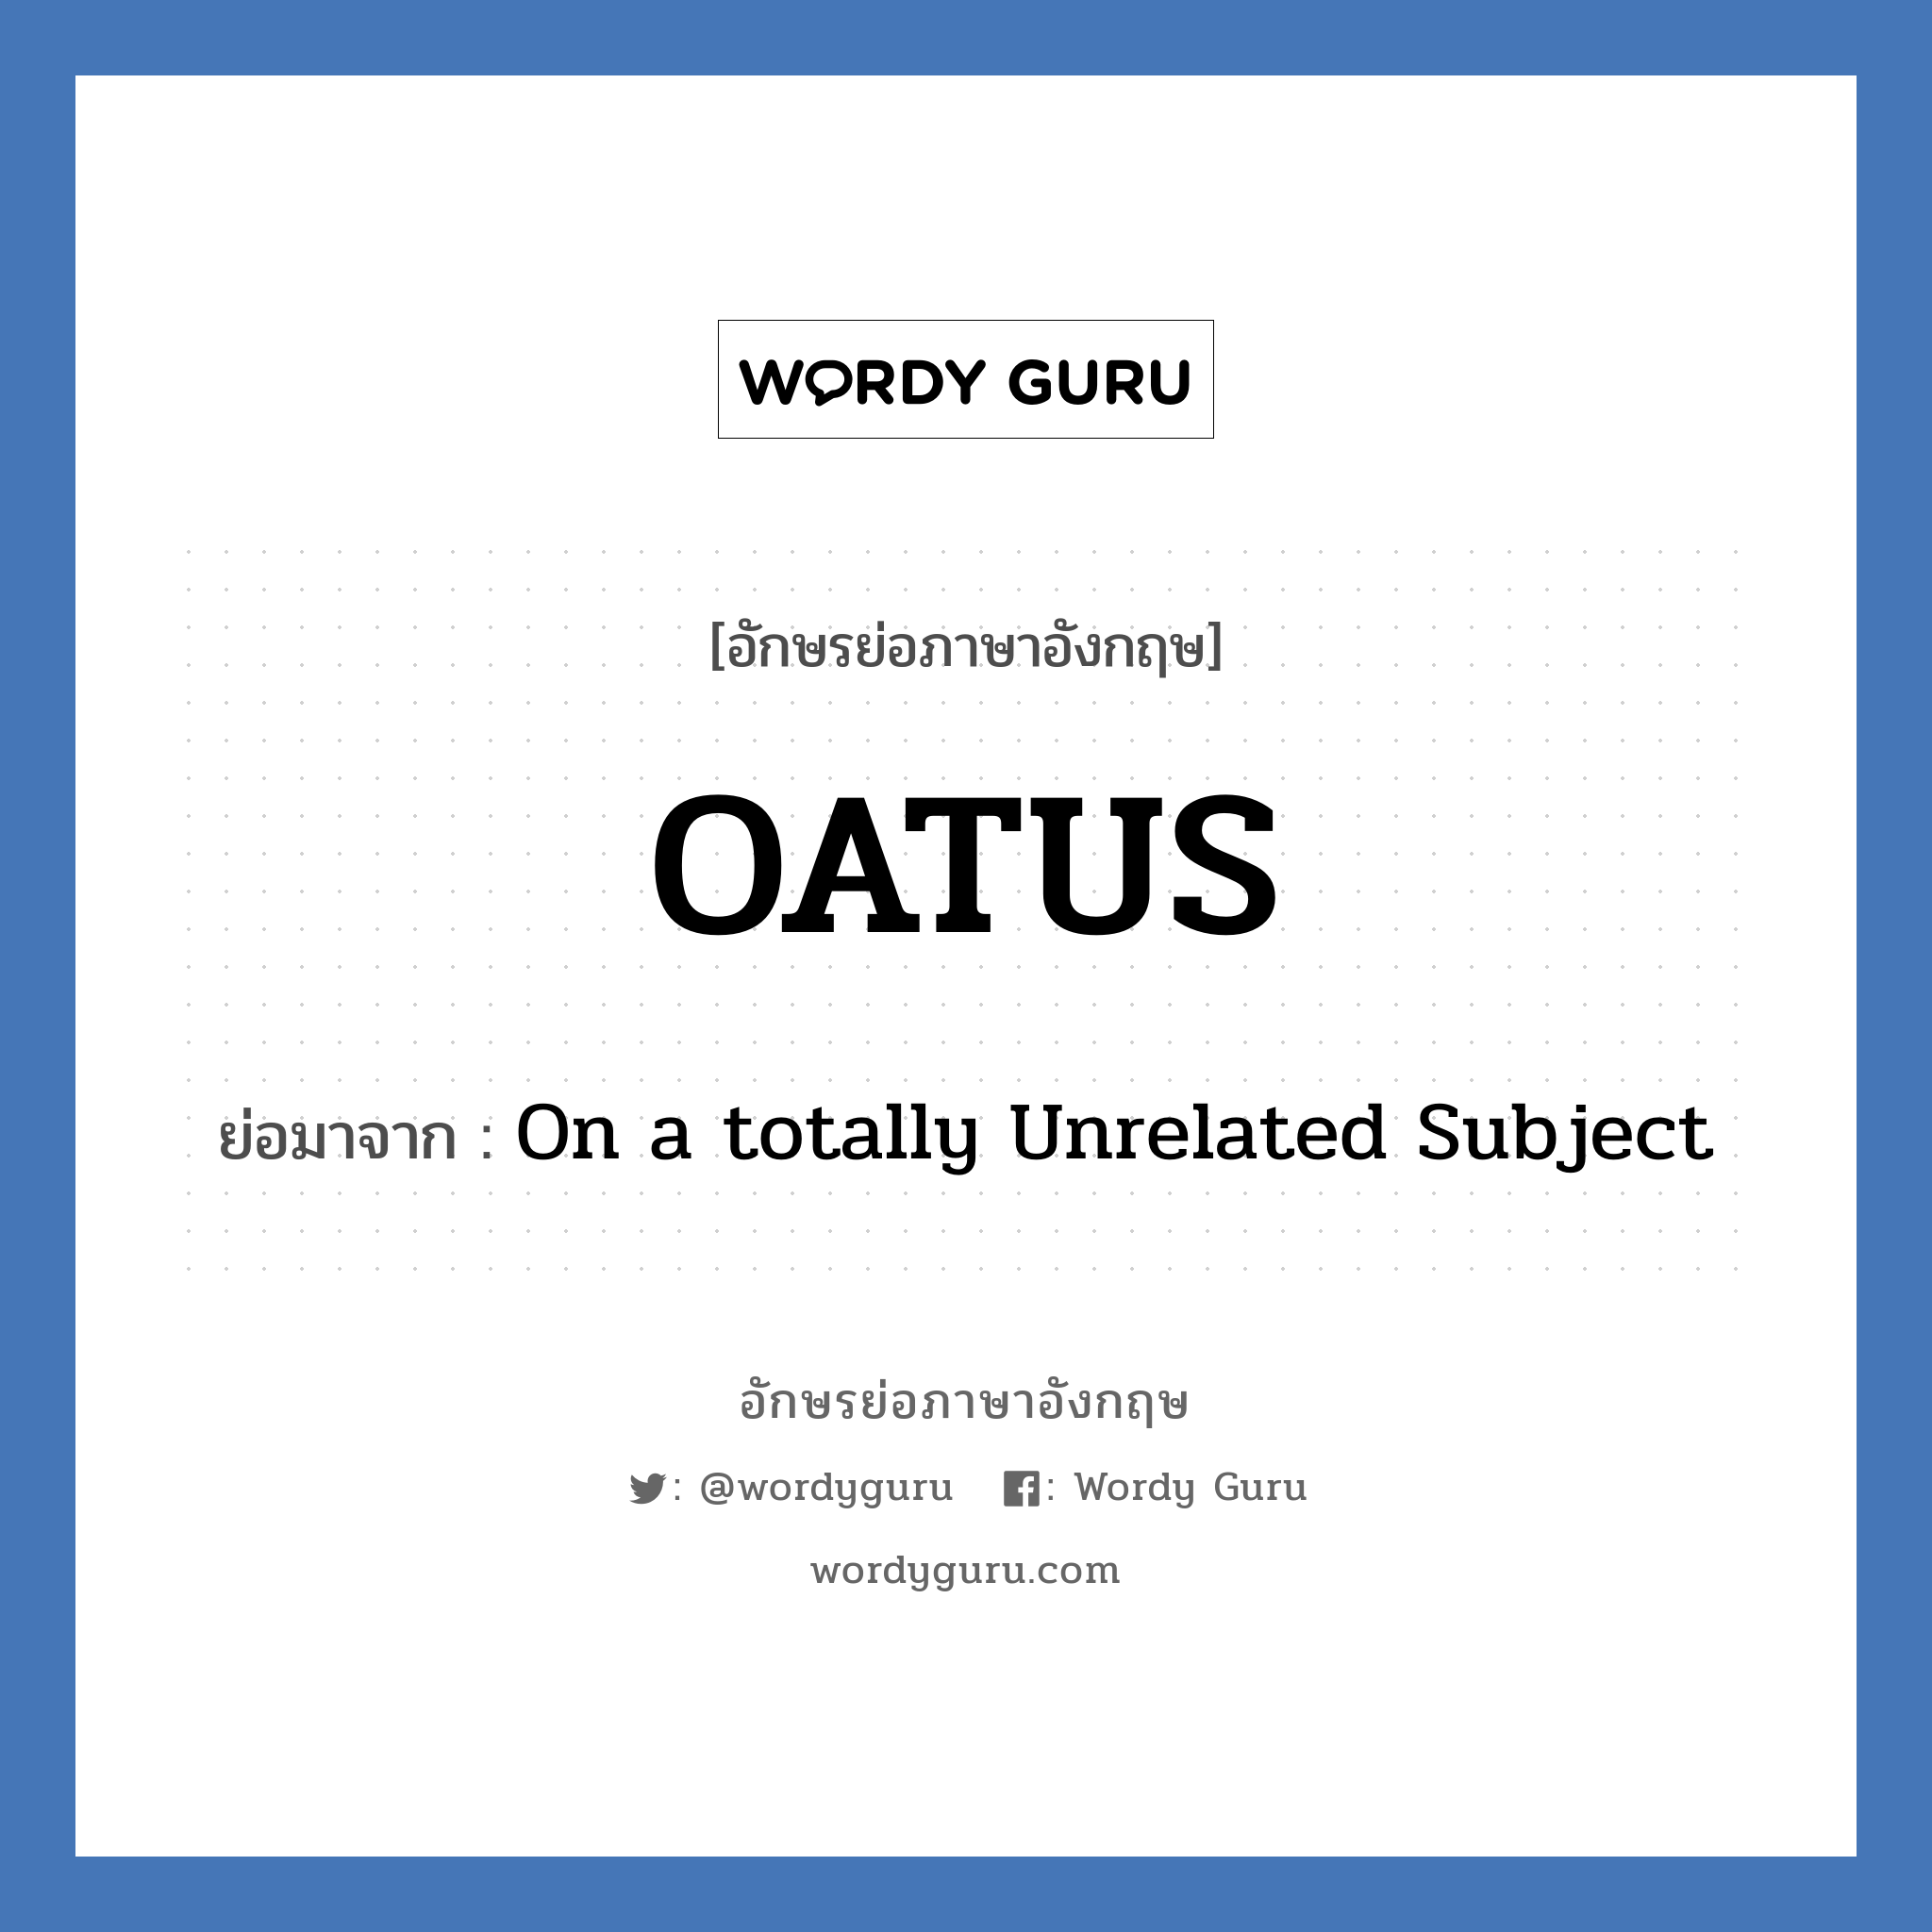 OATUS ย่อมาจาก? แปลว่า?, อักษรย่อภาษาอังกฤษ OATUS ย่อมาจาก On a totally Unrelated Subject